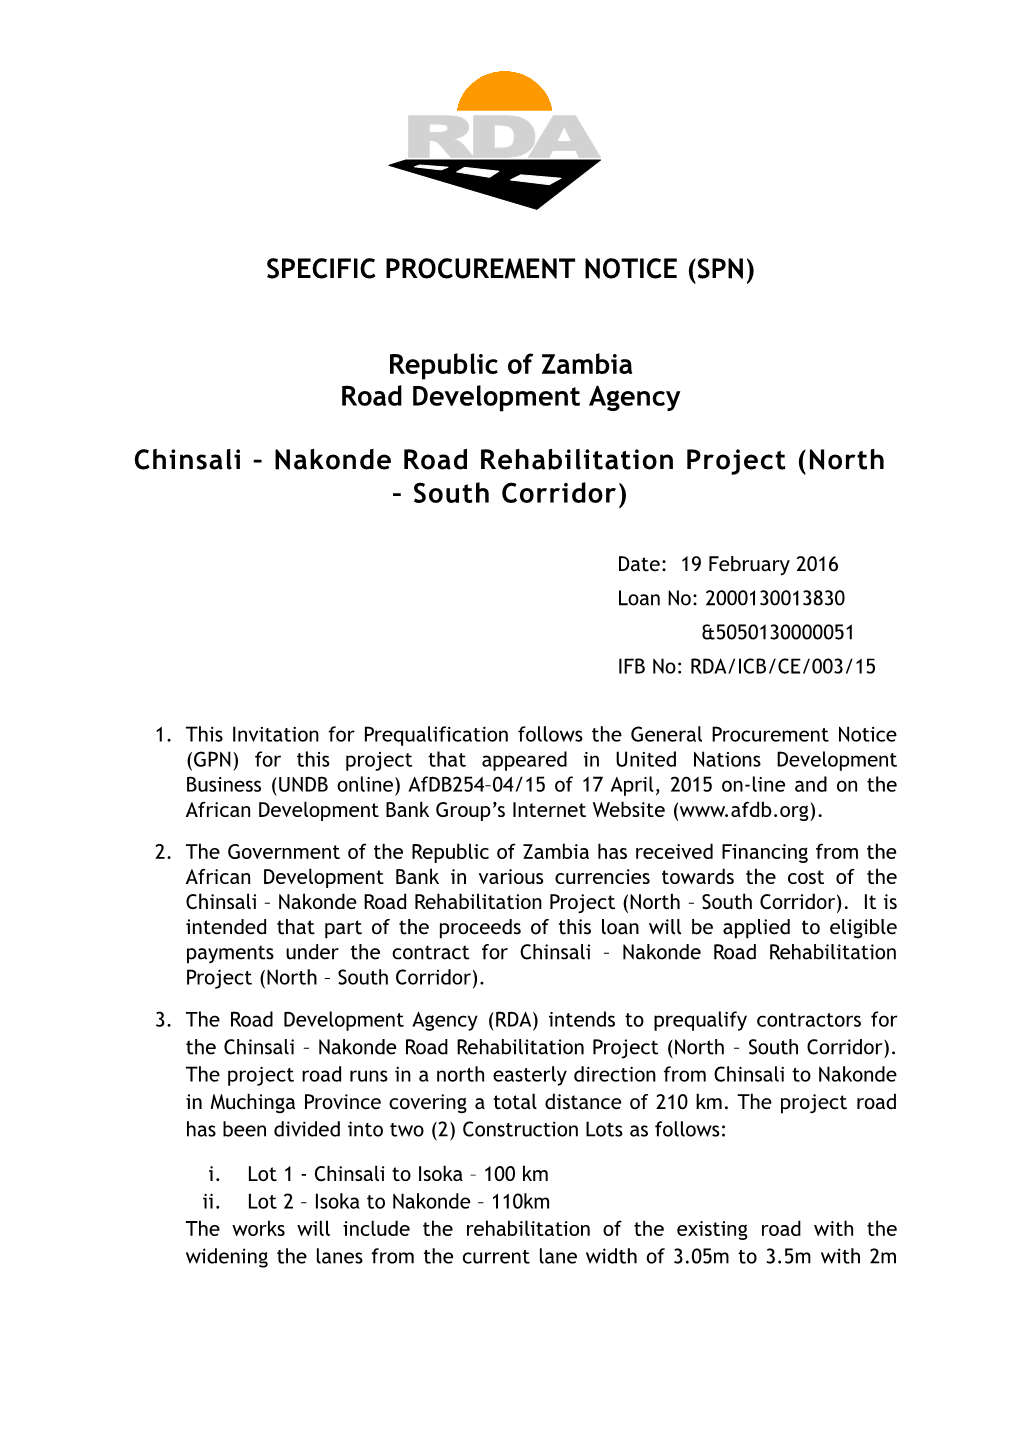 Chinsali – Nakonde Road Rehabilitation Project (North – South Corridor)